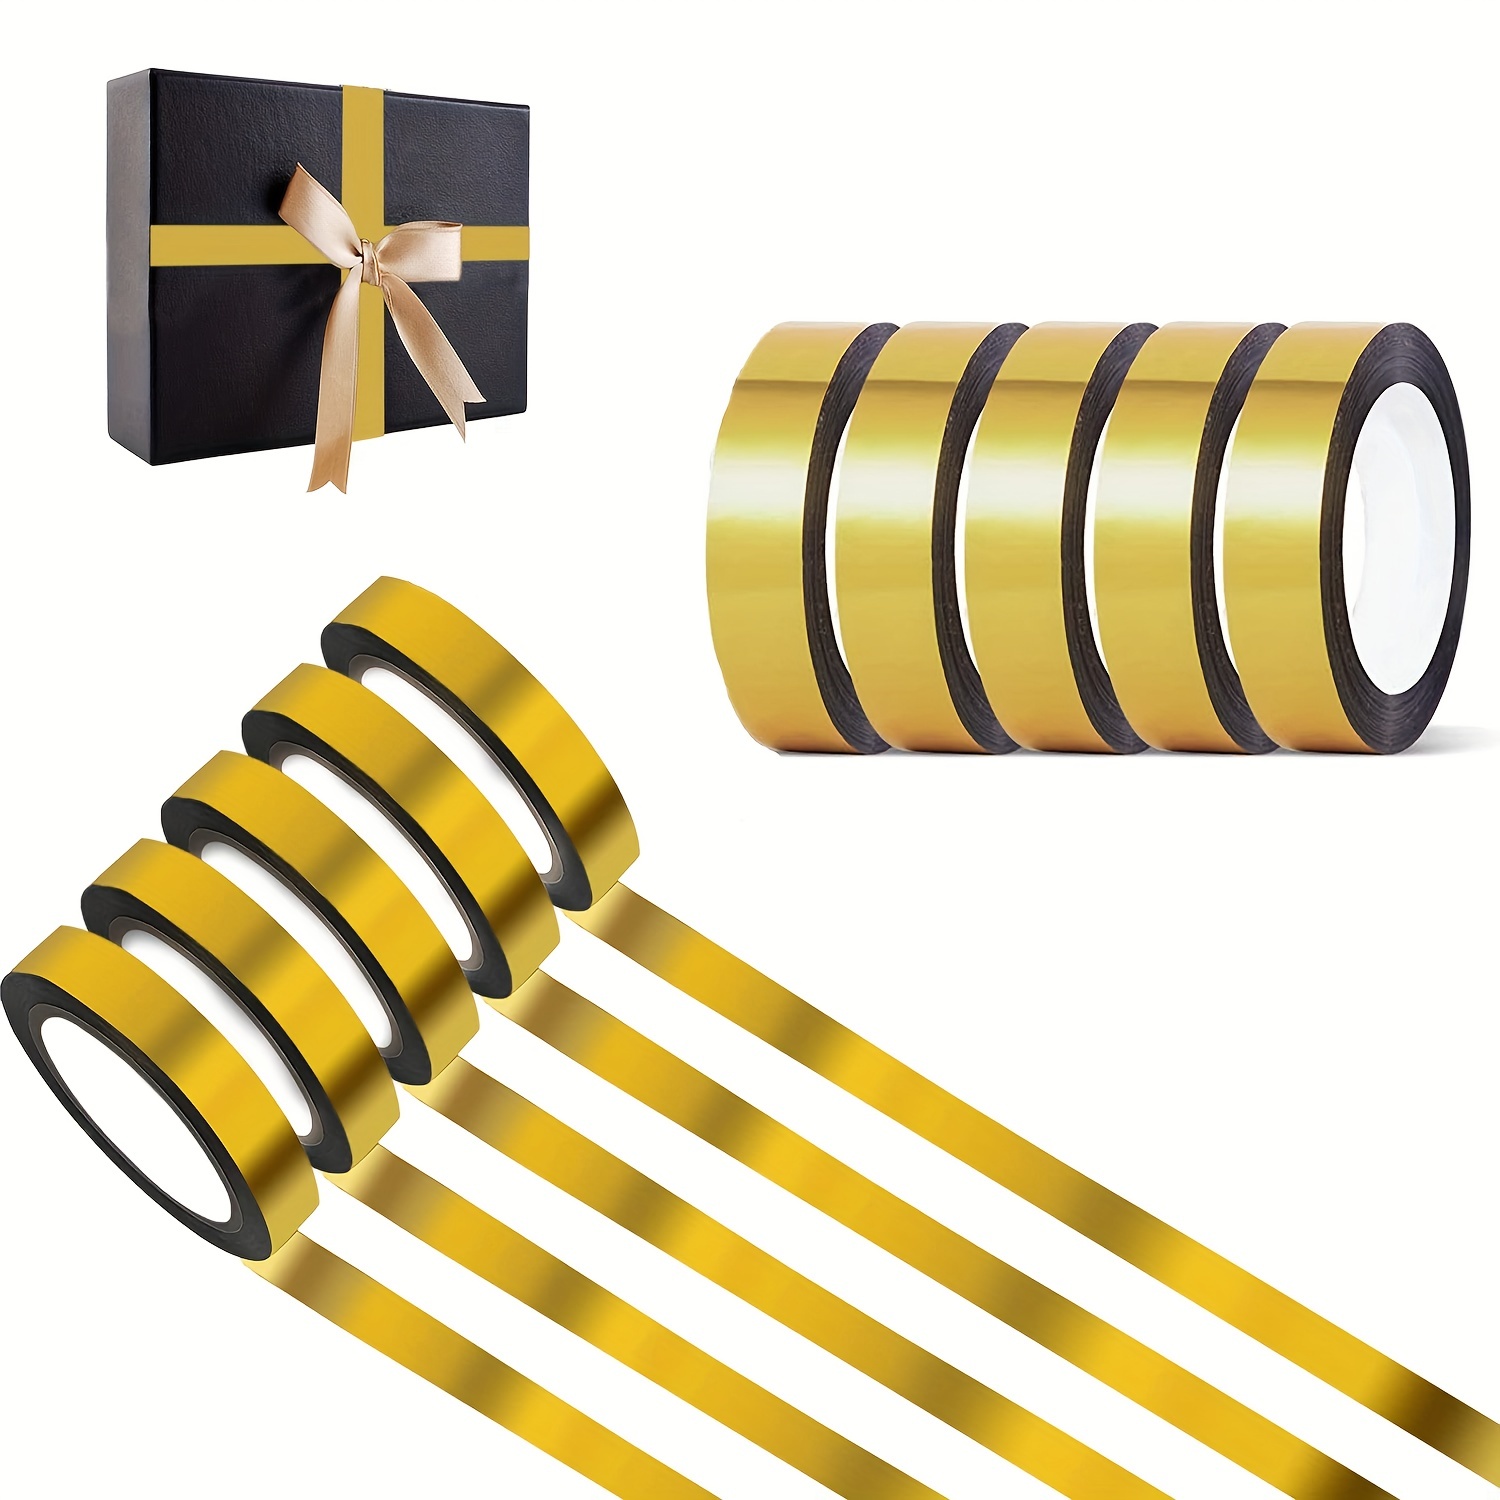 6 rollos de cinta metálica dorada, cinta de arte gráfica dorada  autoadhesiva de poliéster metalizado para decoración de manualidades,  decoración de